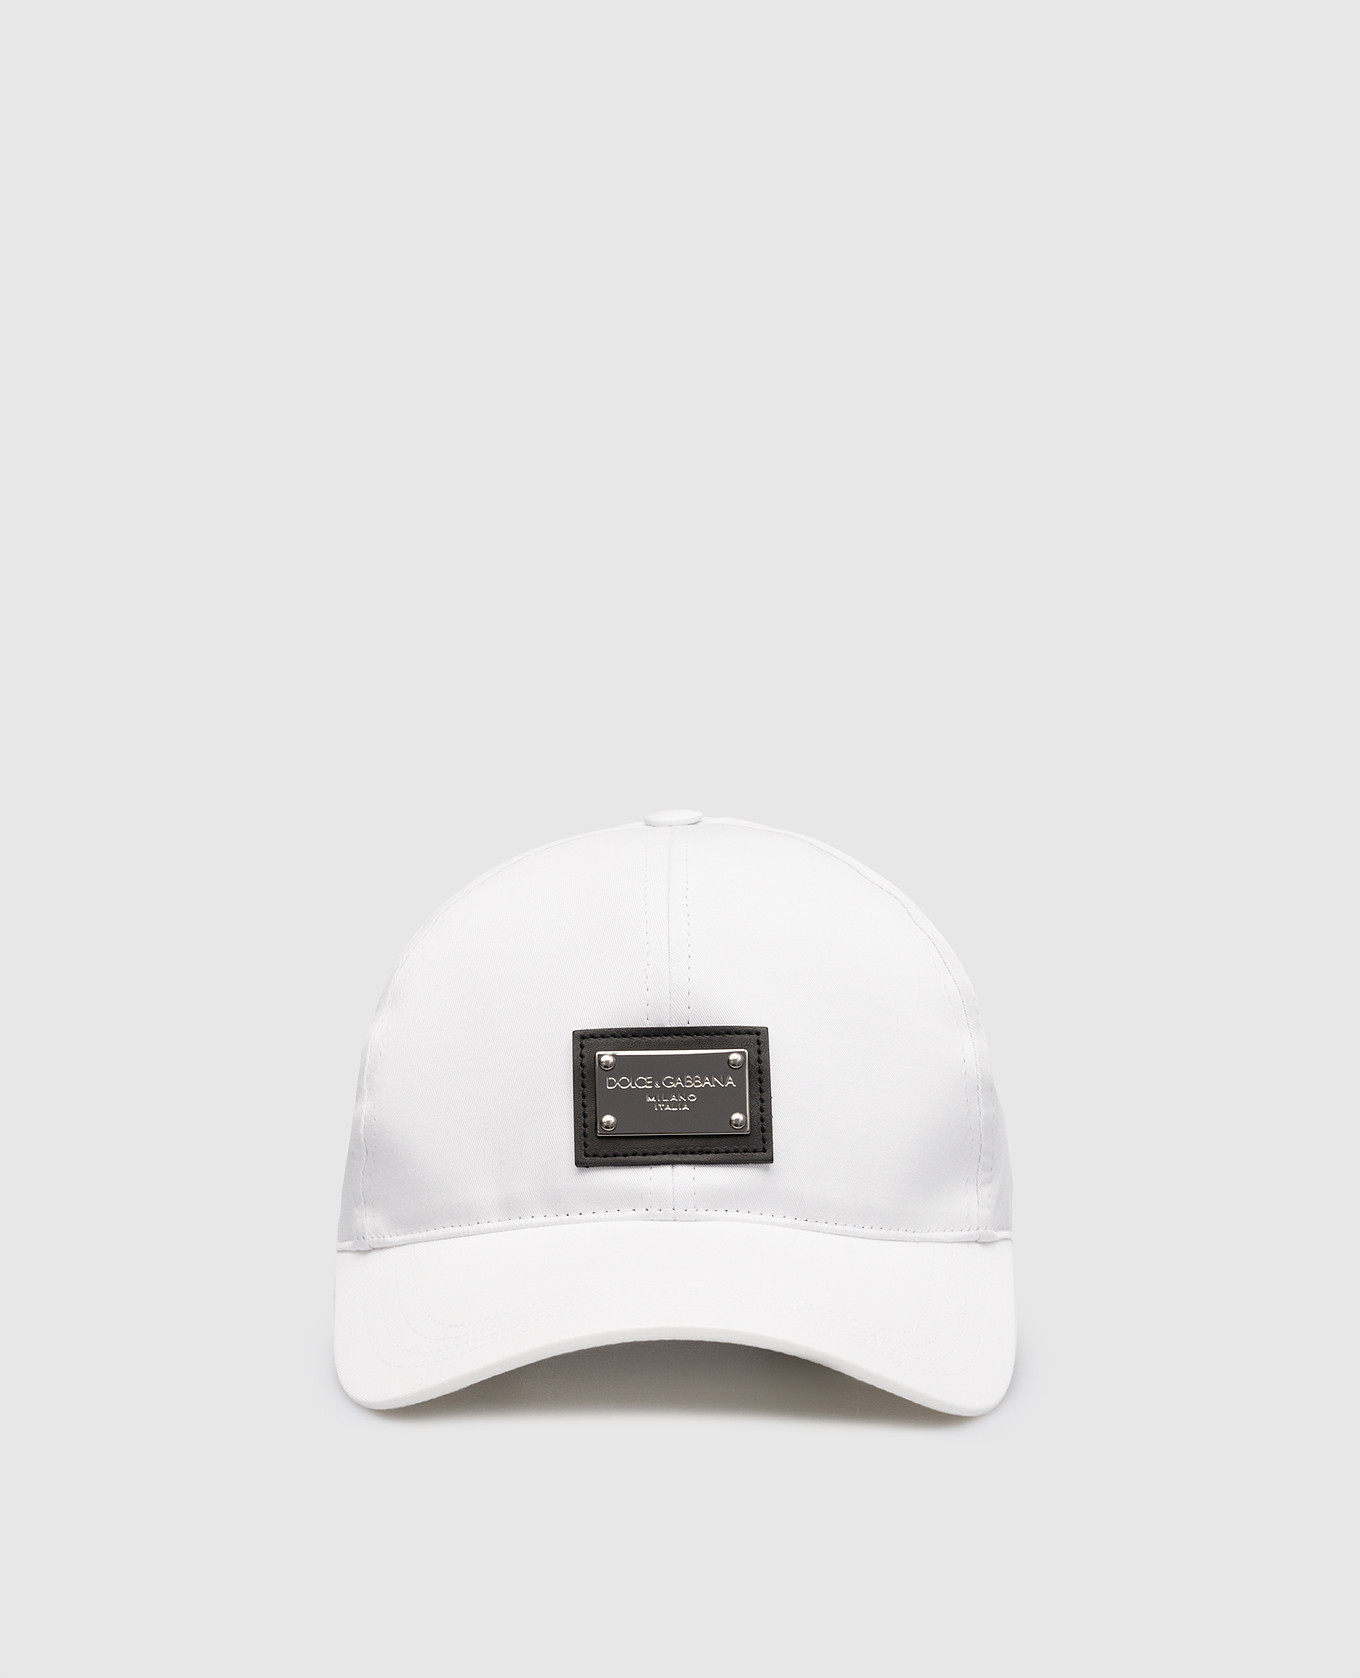 White cap with metal logo